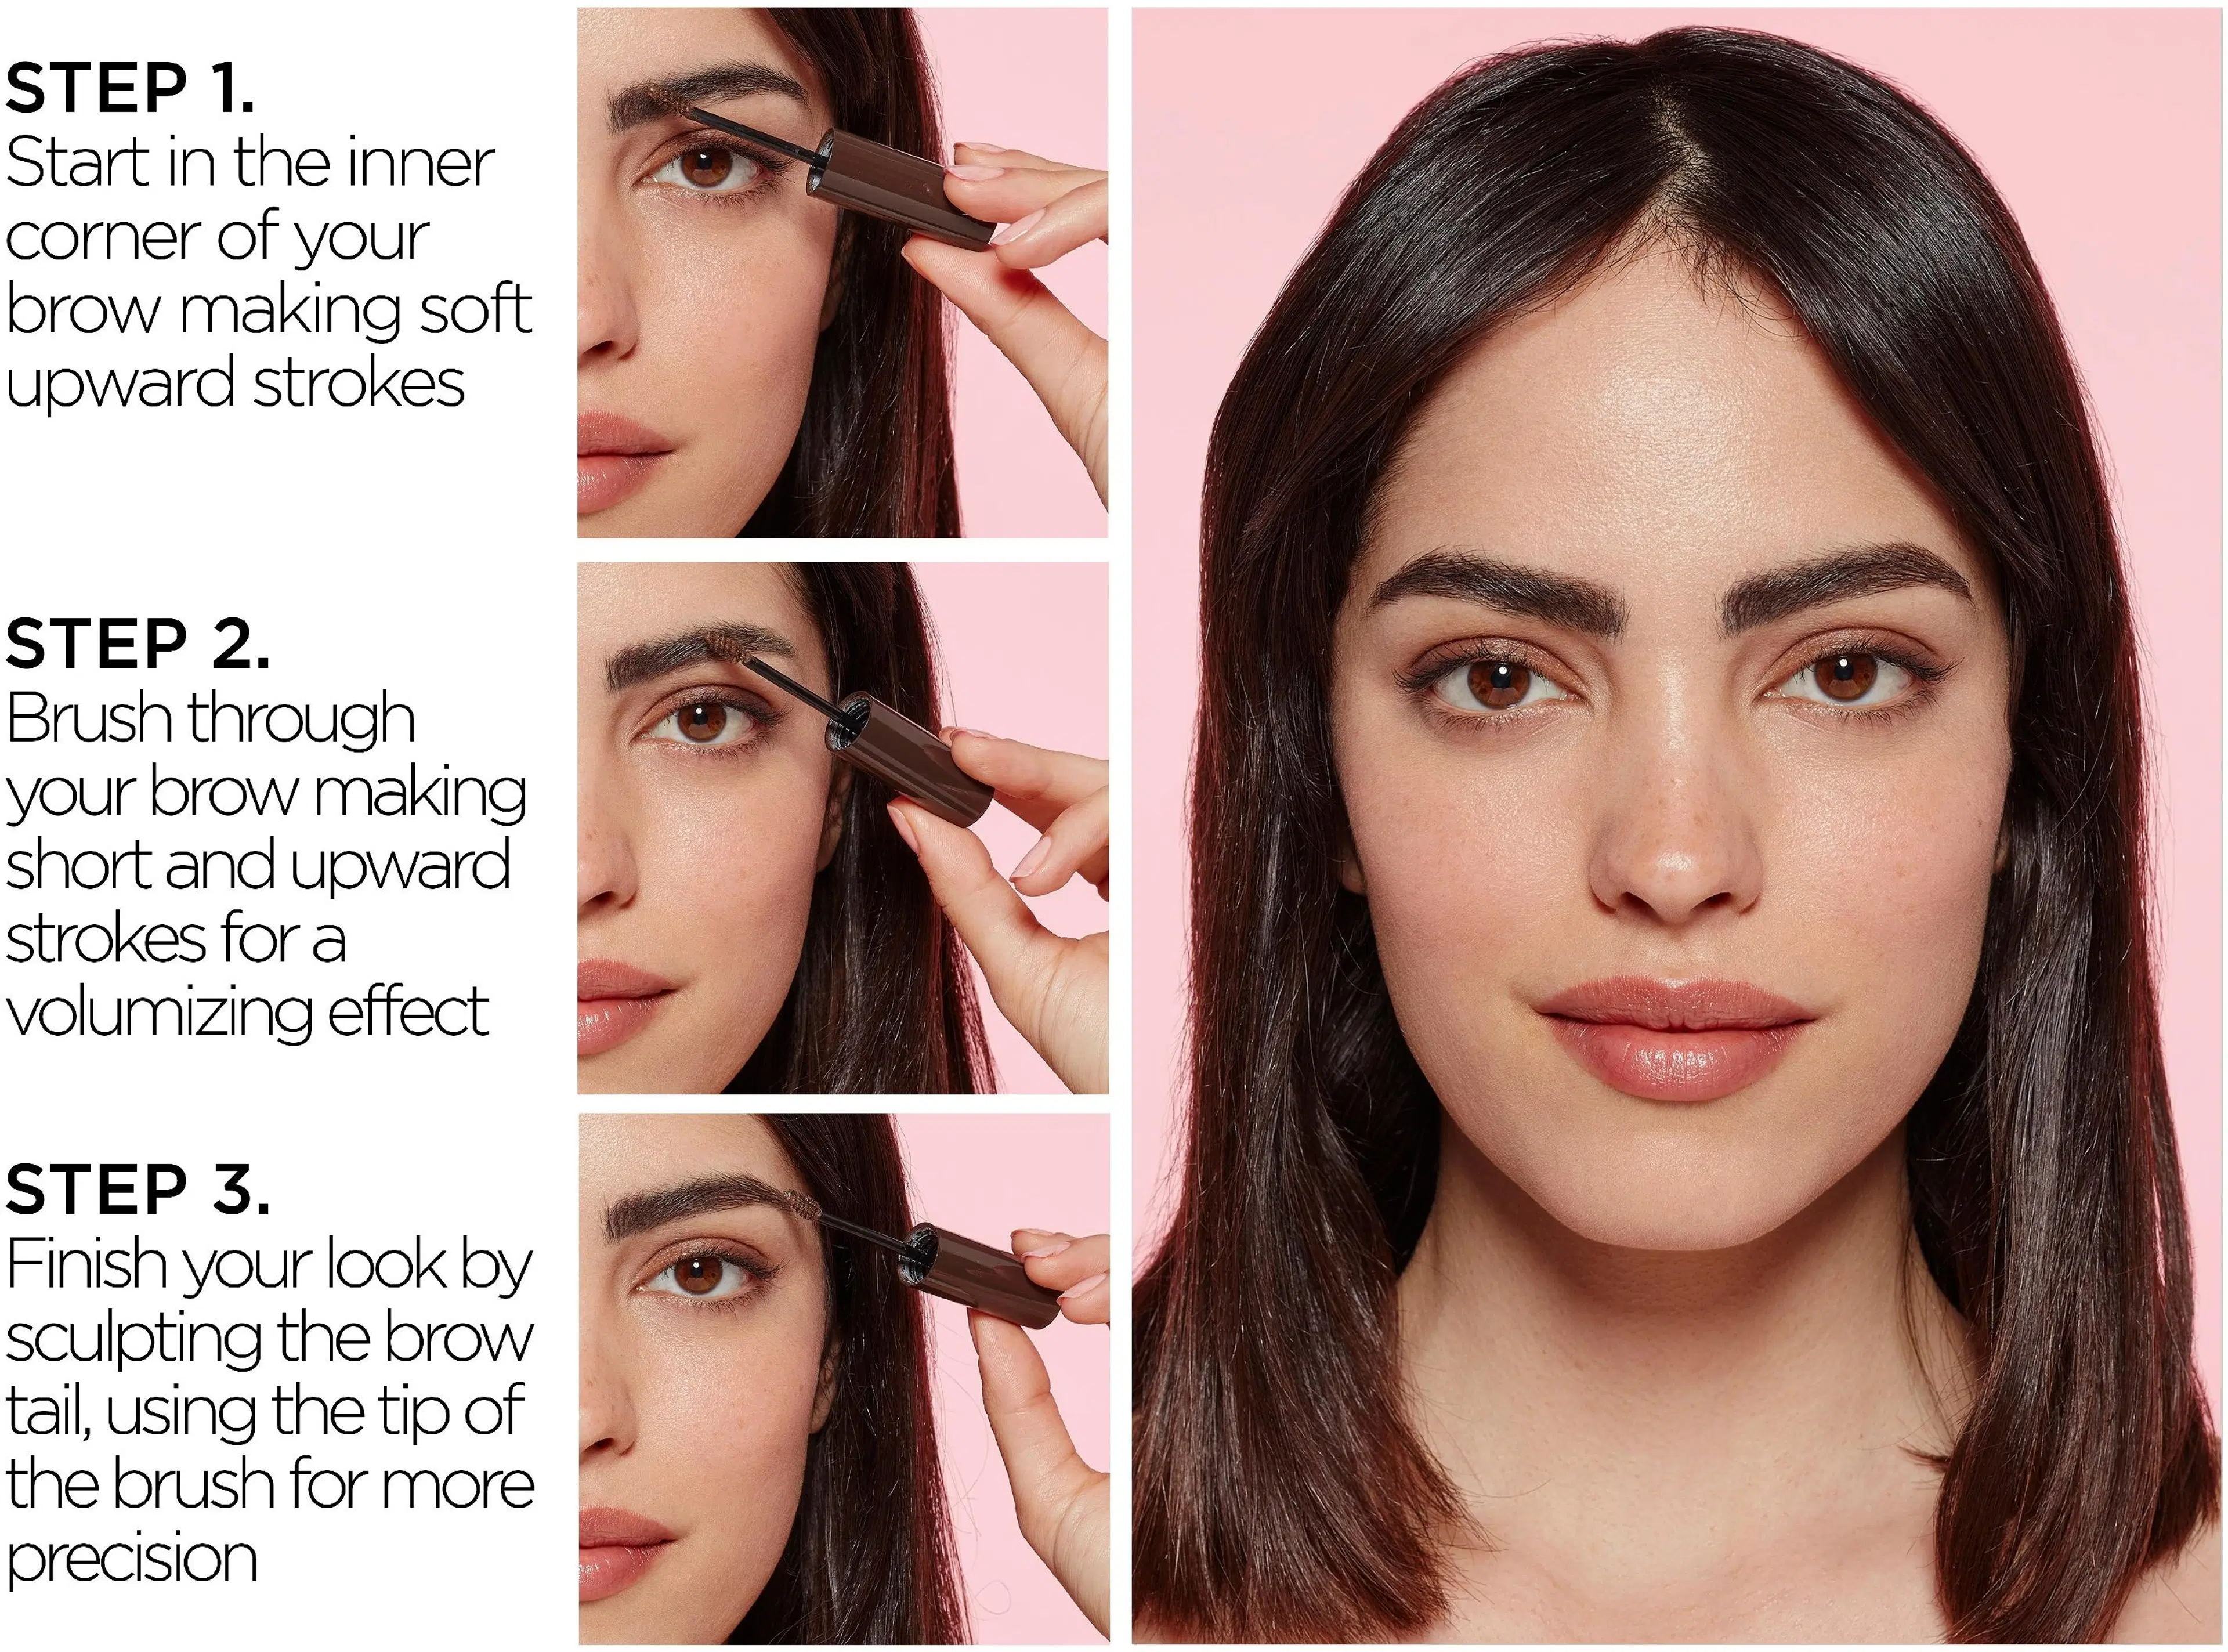 L'Oréal Paris Infaillible Brows 24H Volumizing Eyebrow Mascara Clear kulmamaskara 4,9ml